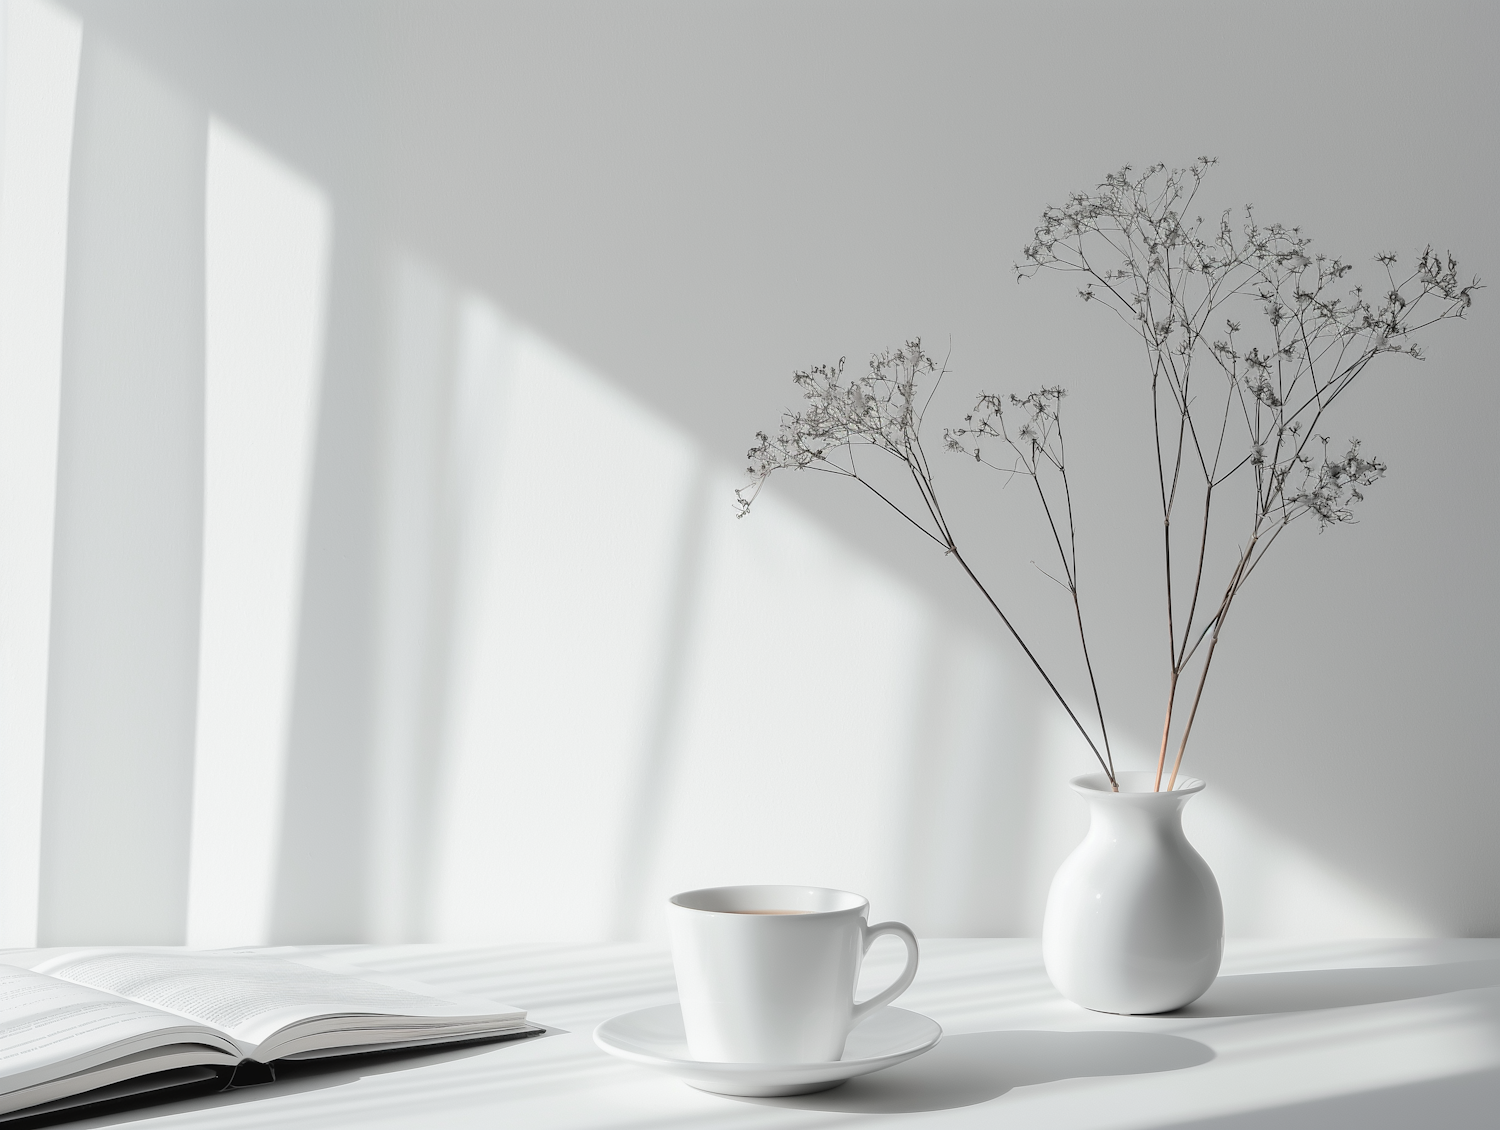 Minimalist Serenity with Book, Mug, and Vase